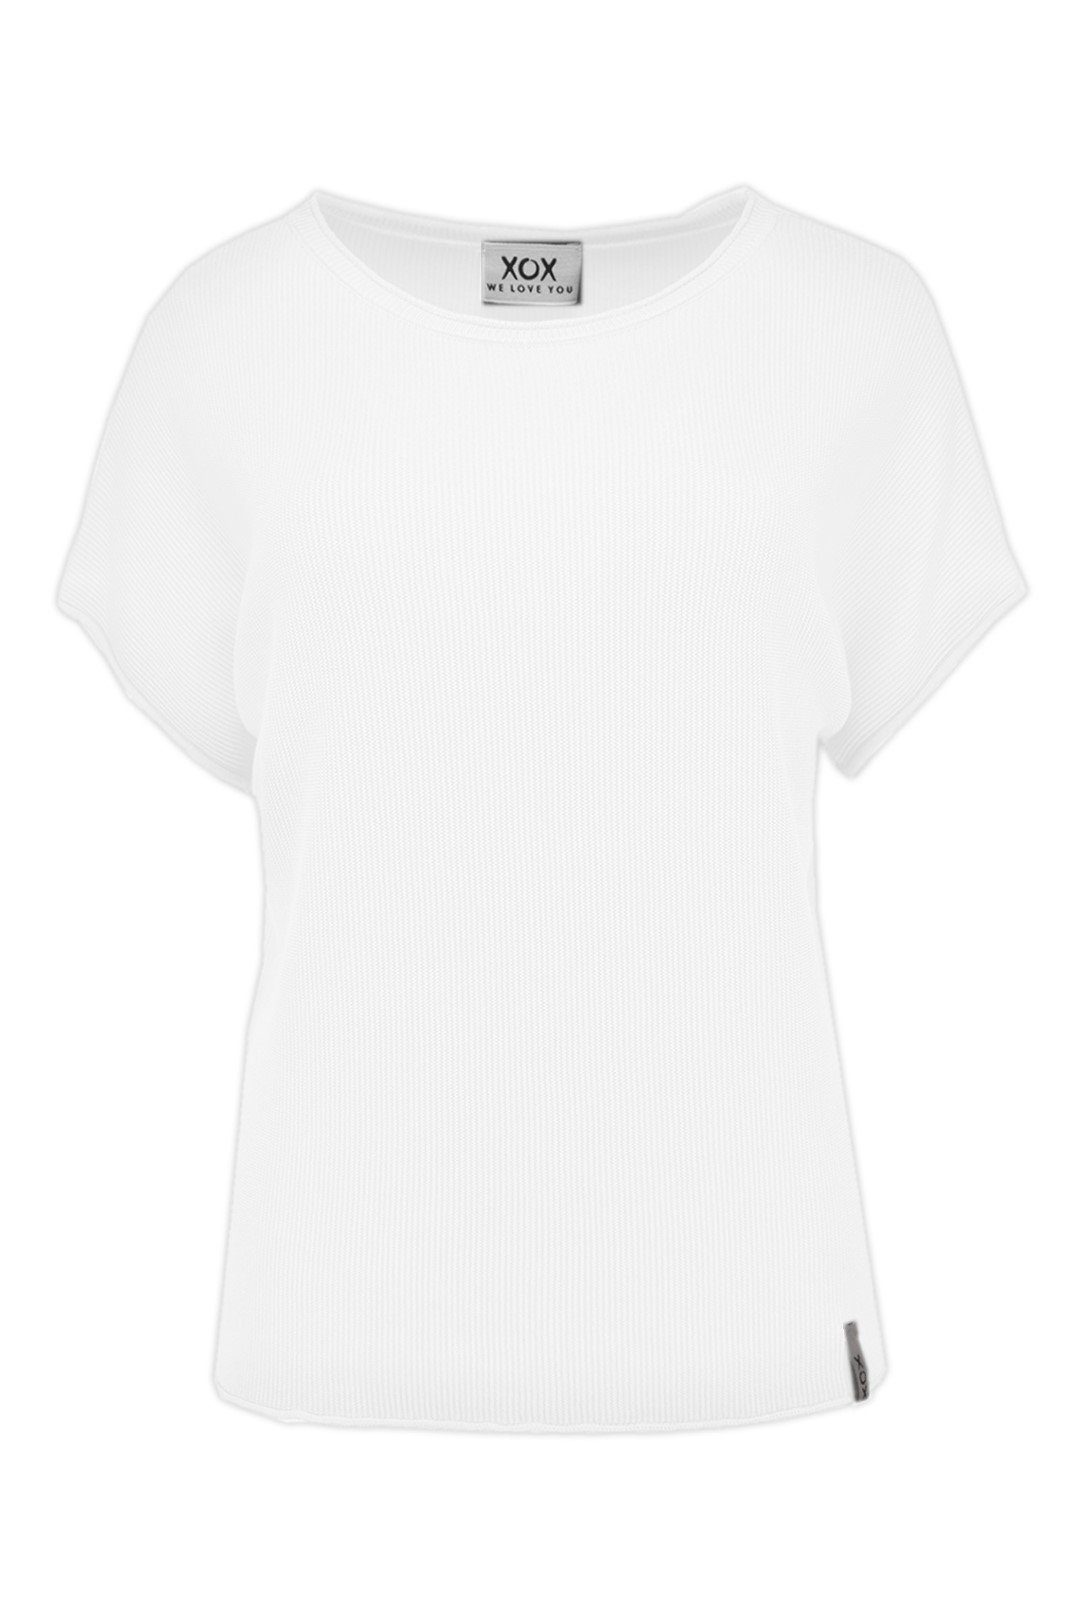 XOX T-Shirt XOX Pullunder Rundhals, kurzarm, Boxy Shirt weiß - Fair Trade, Oberteil, Shirt, Damenmode